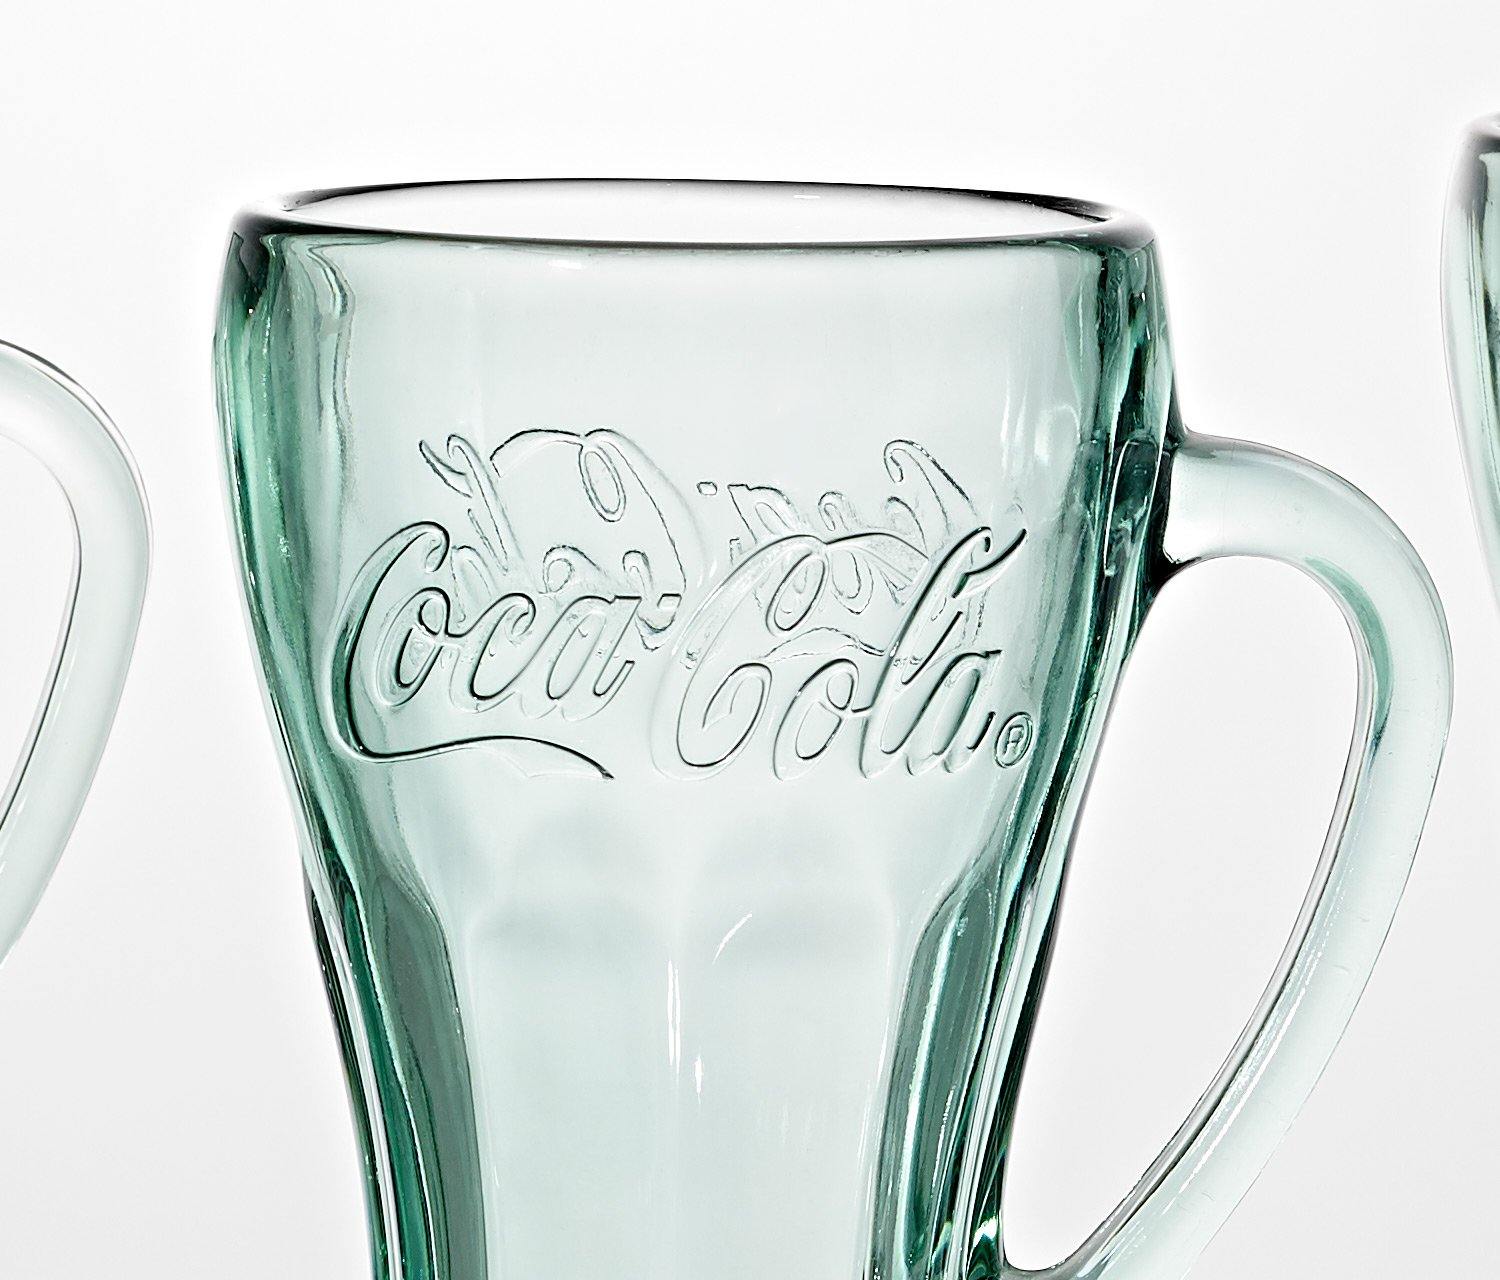 Coca-Cola Genuine Mug